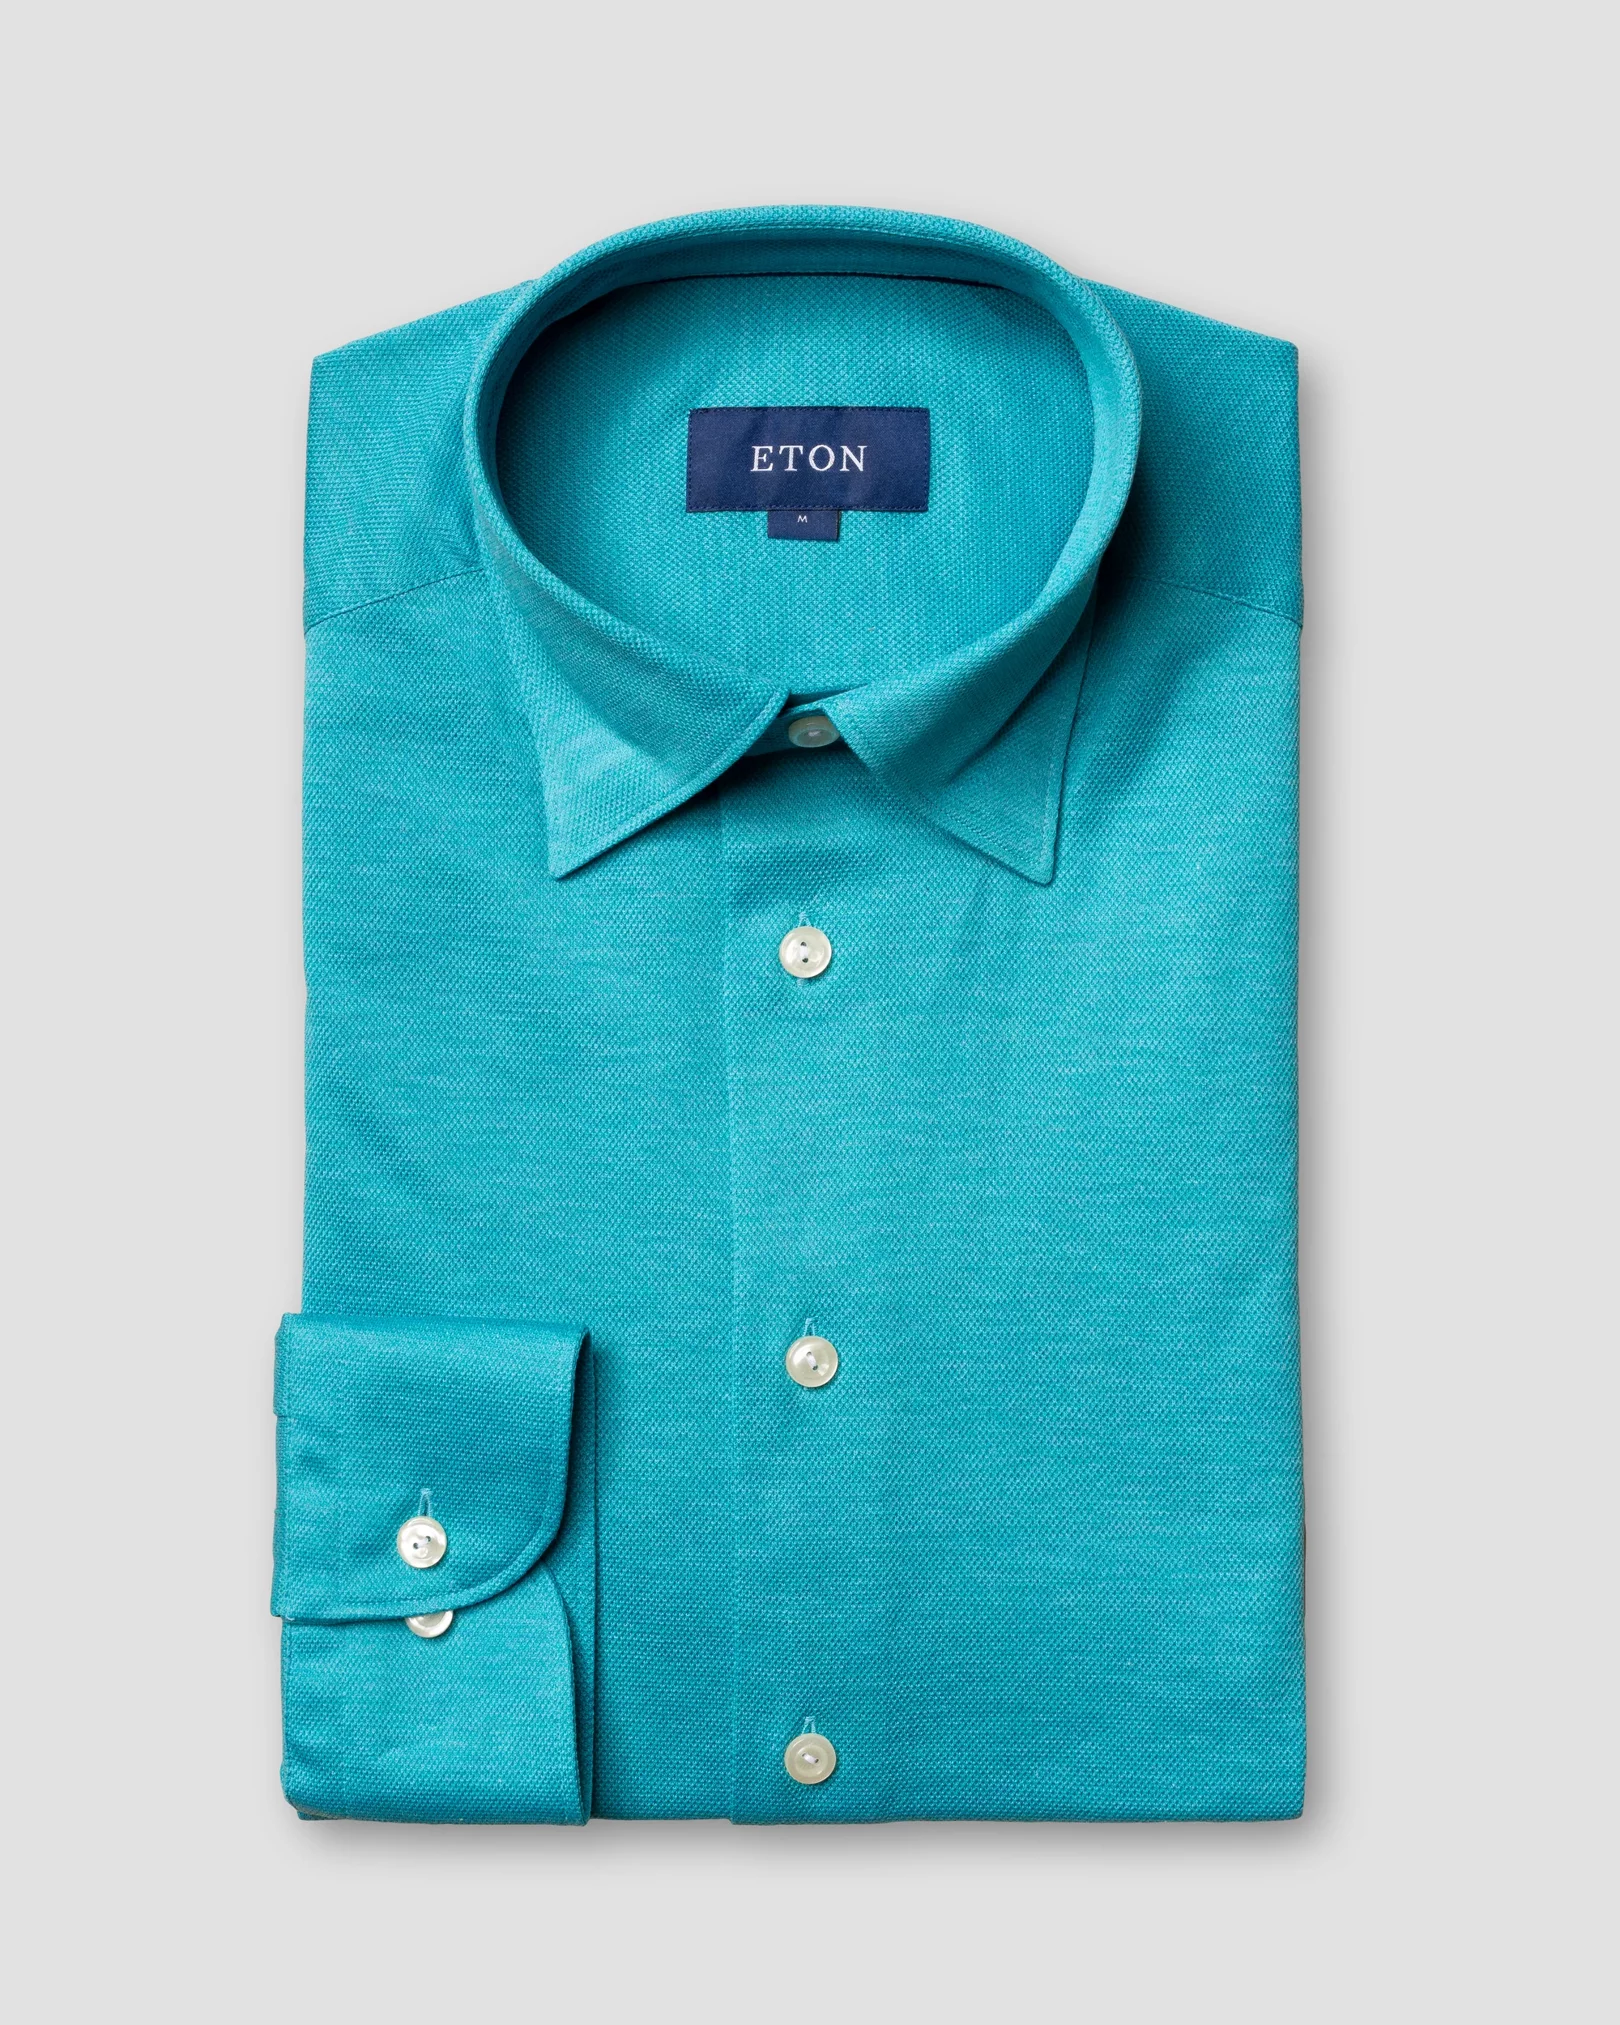 Eton - turquoise pique shirt long sleeved